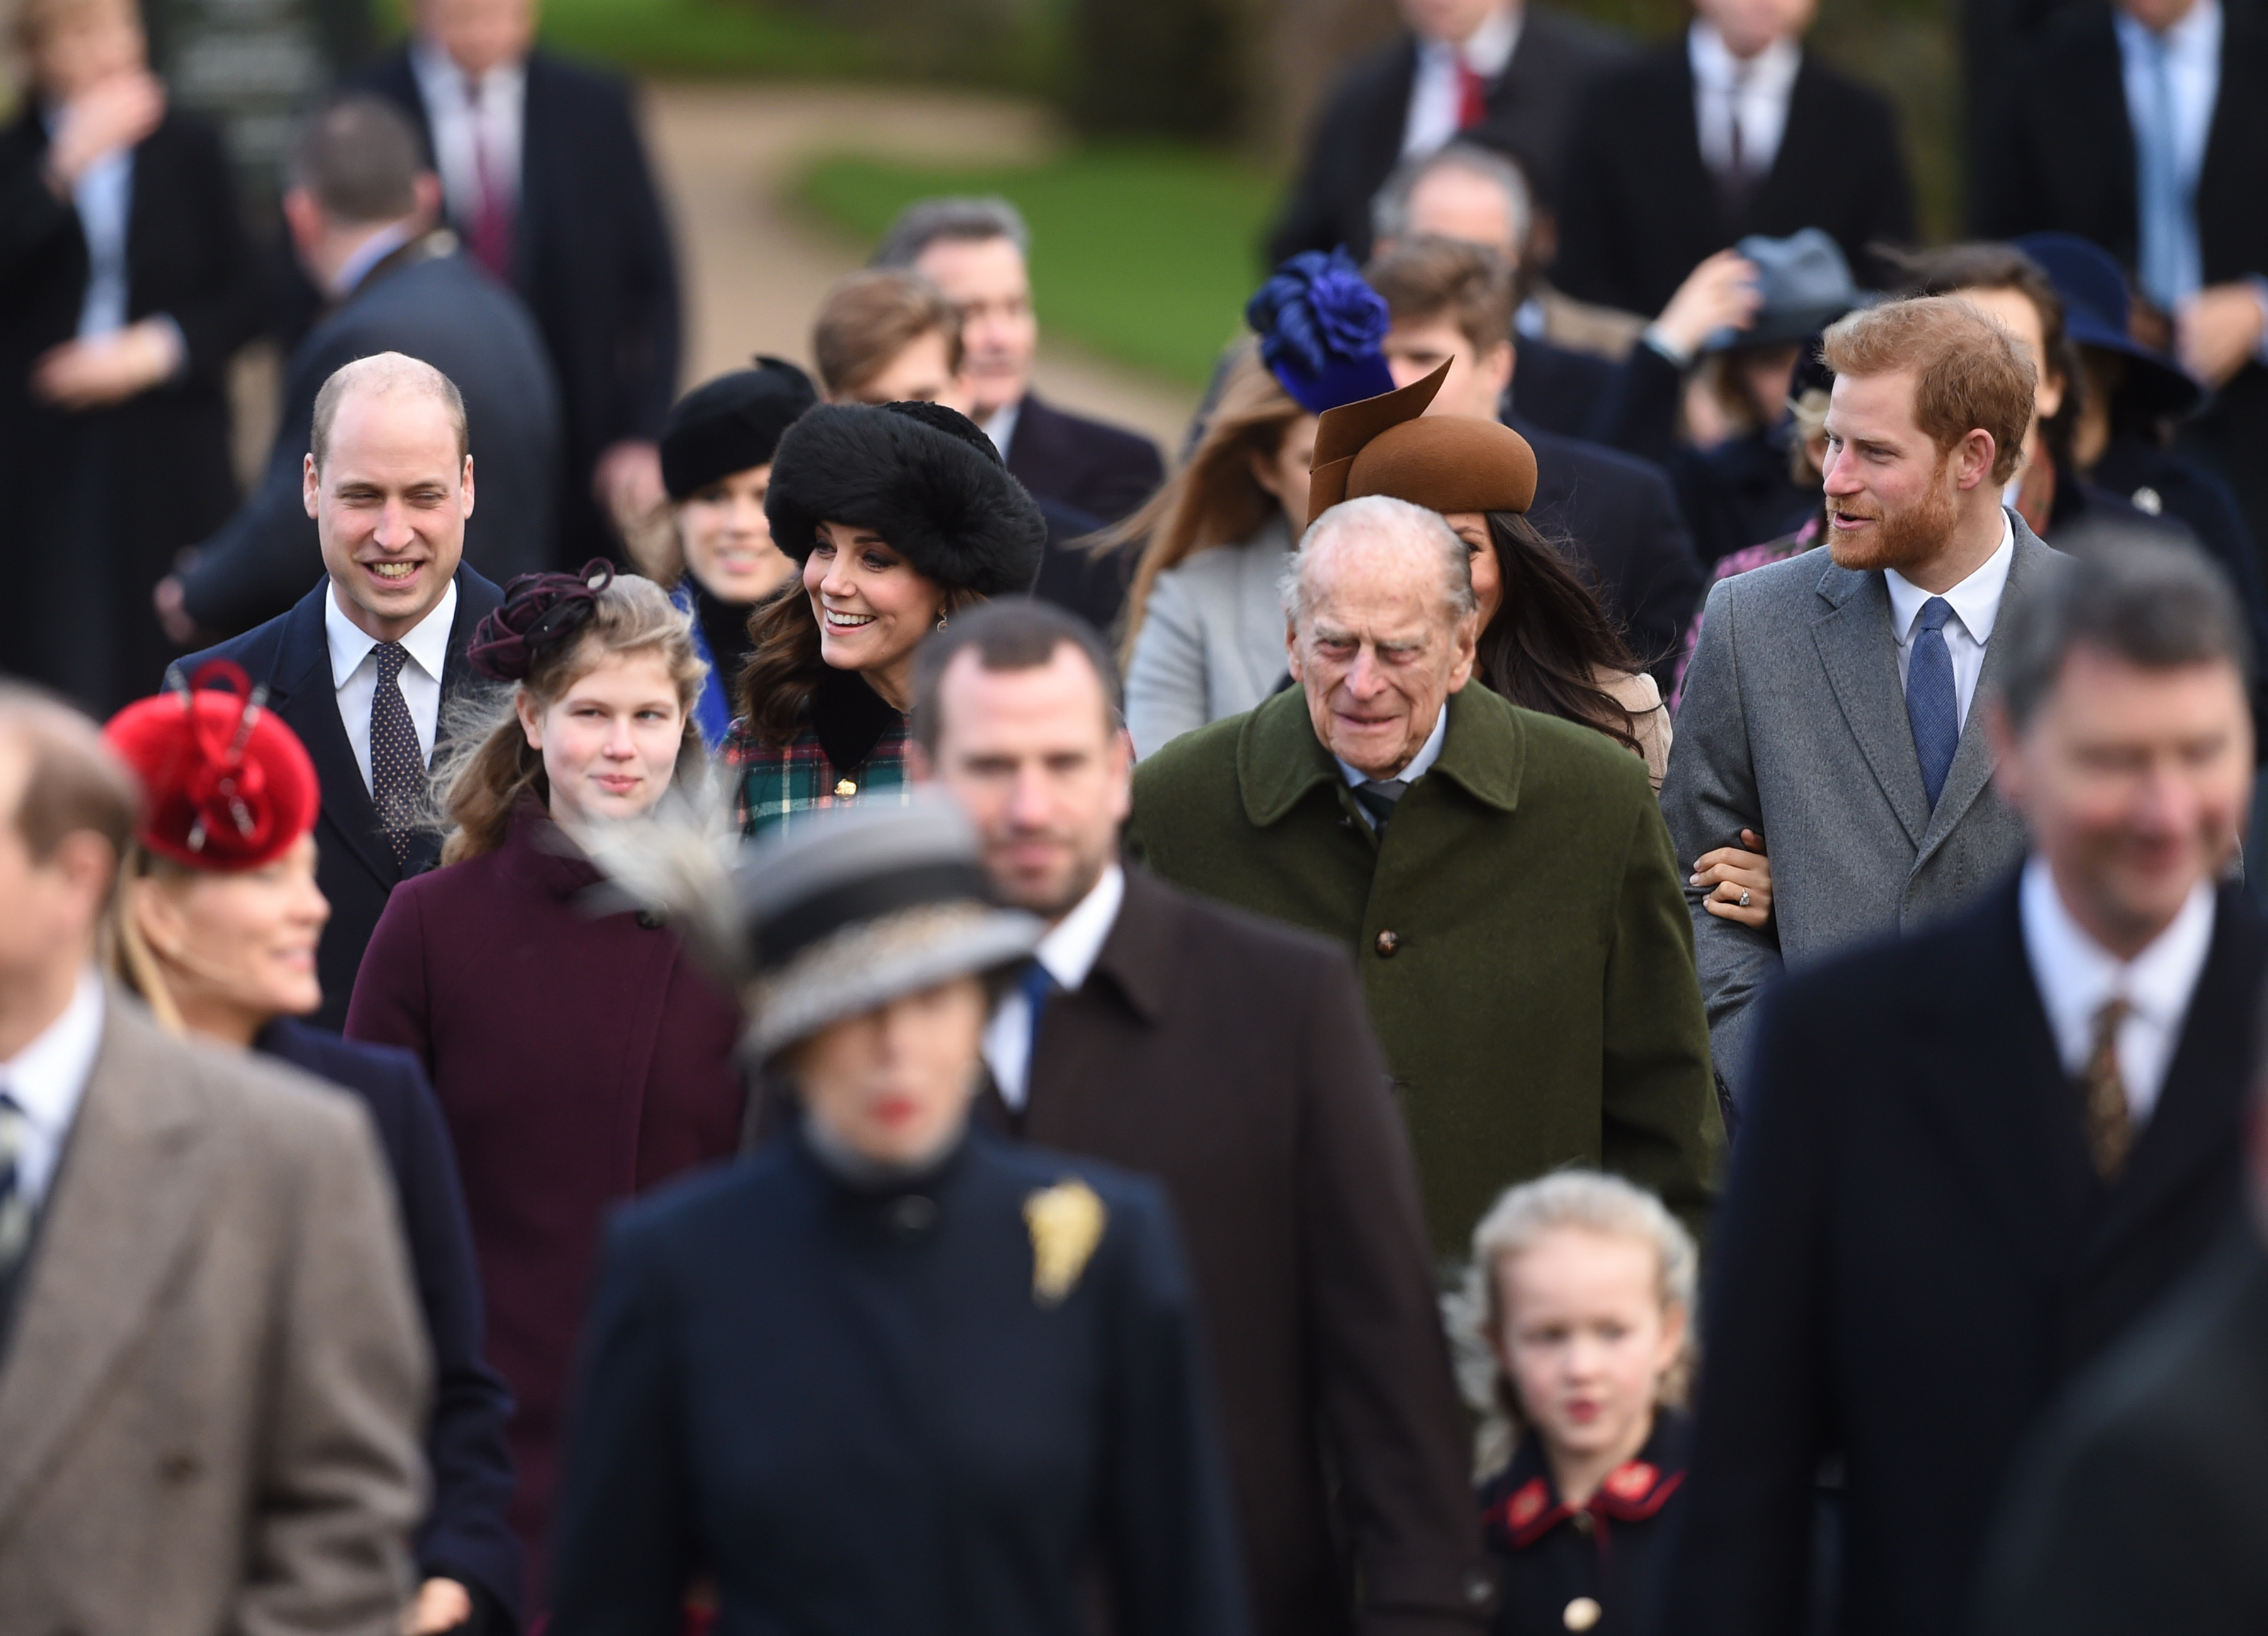 Prince George Struggling In Royal Christmas Video Make Fans Go Crazy